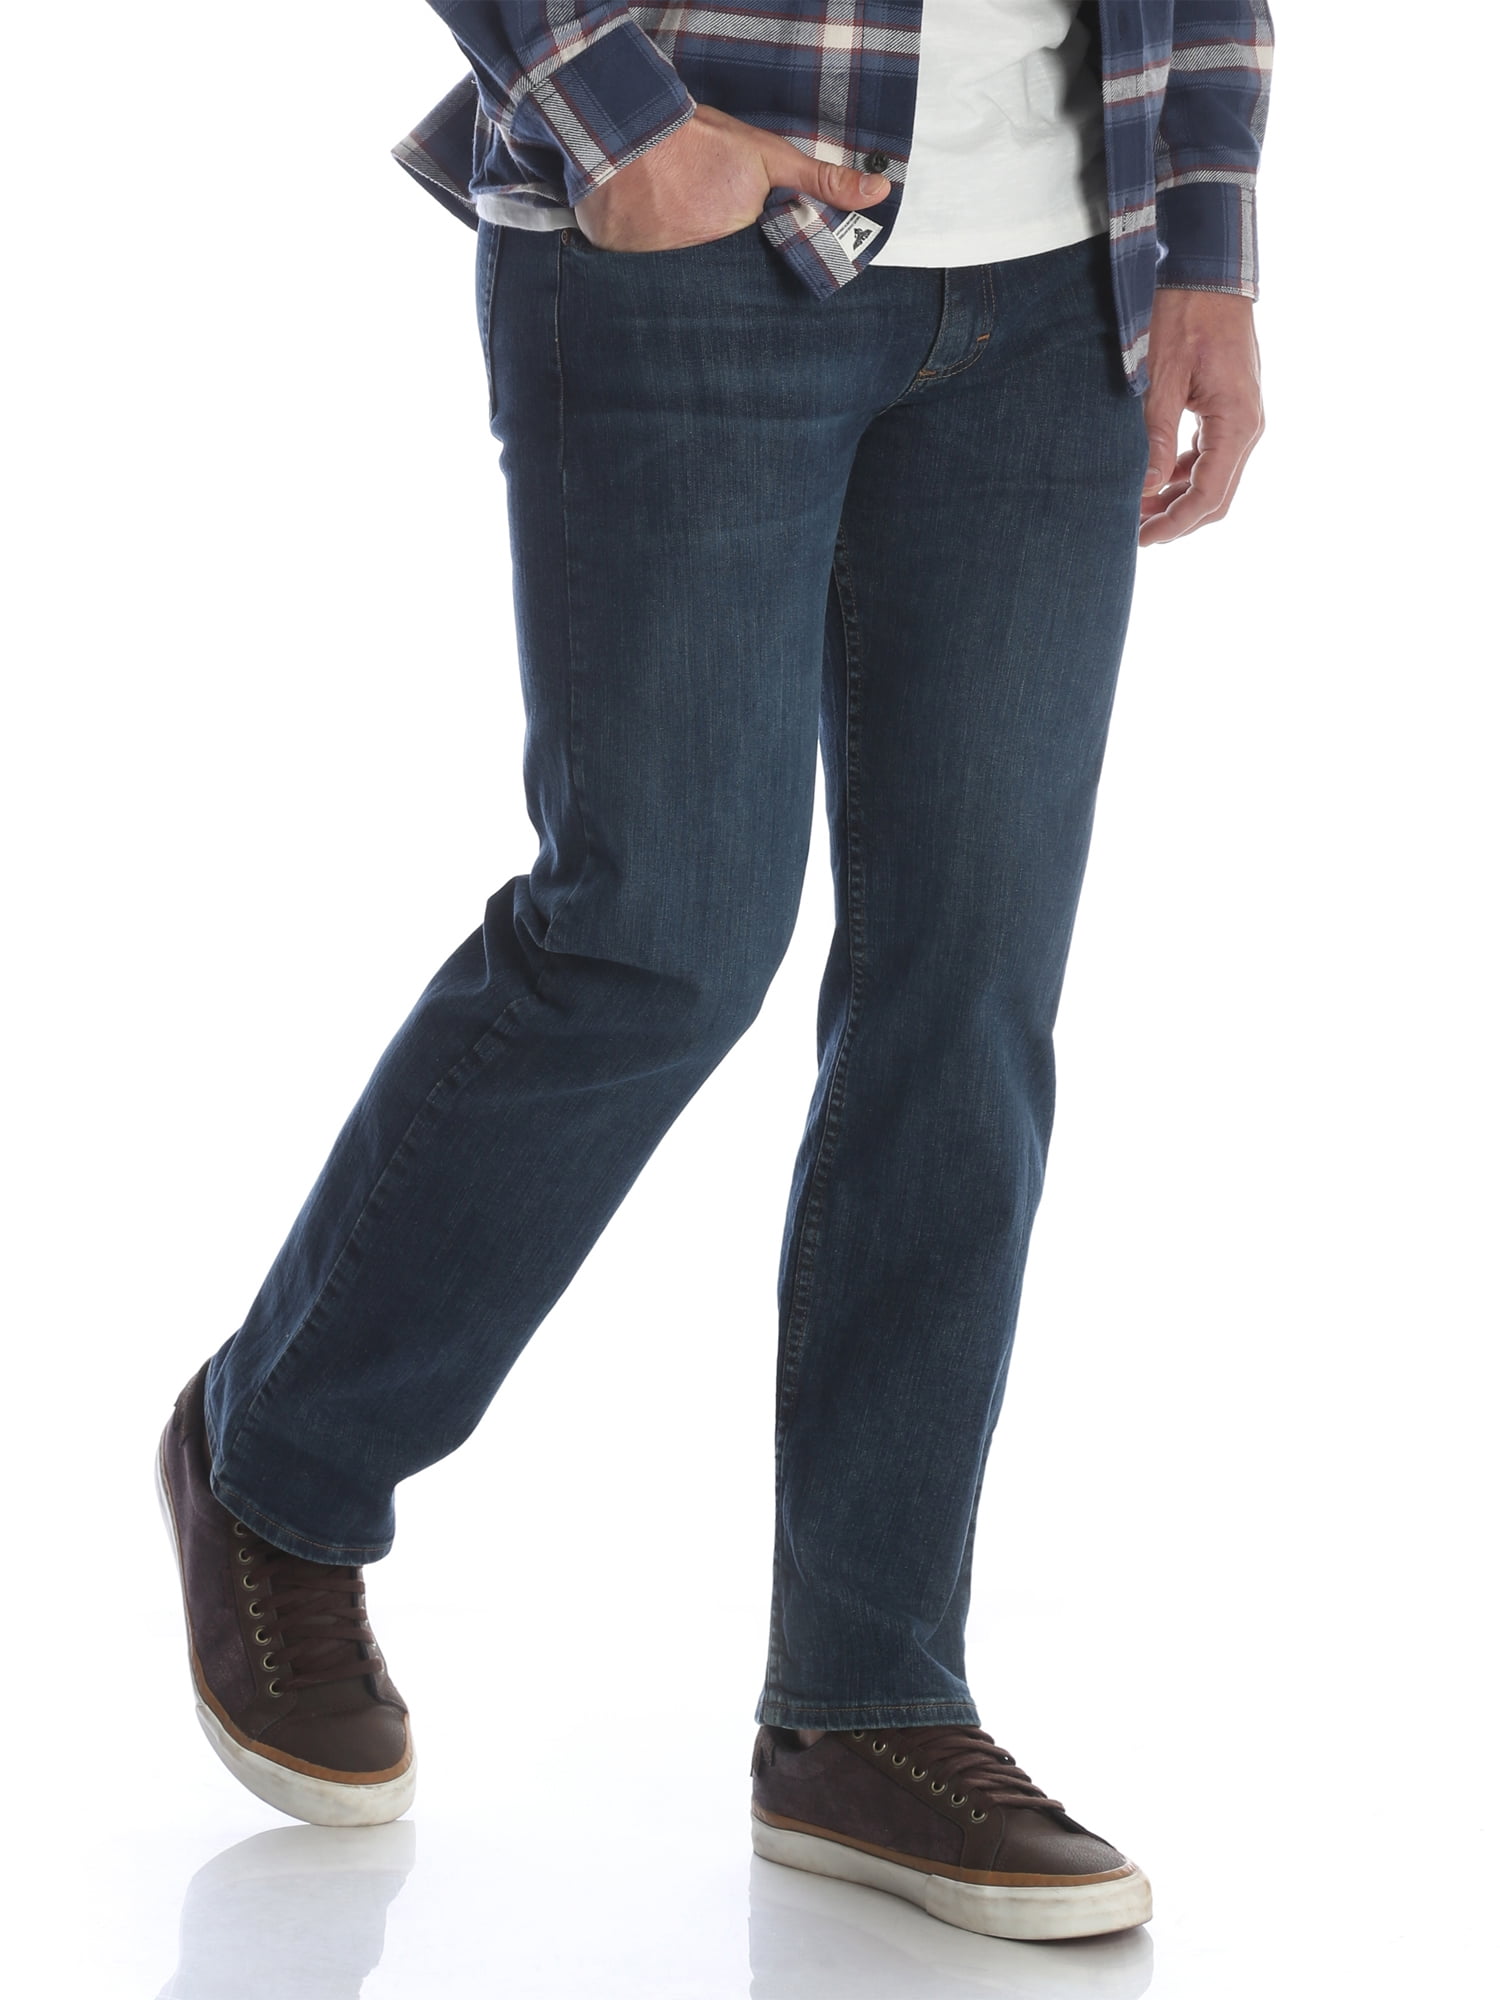 wrangler performance series regular fit jeans